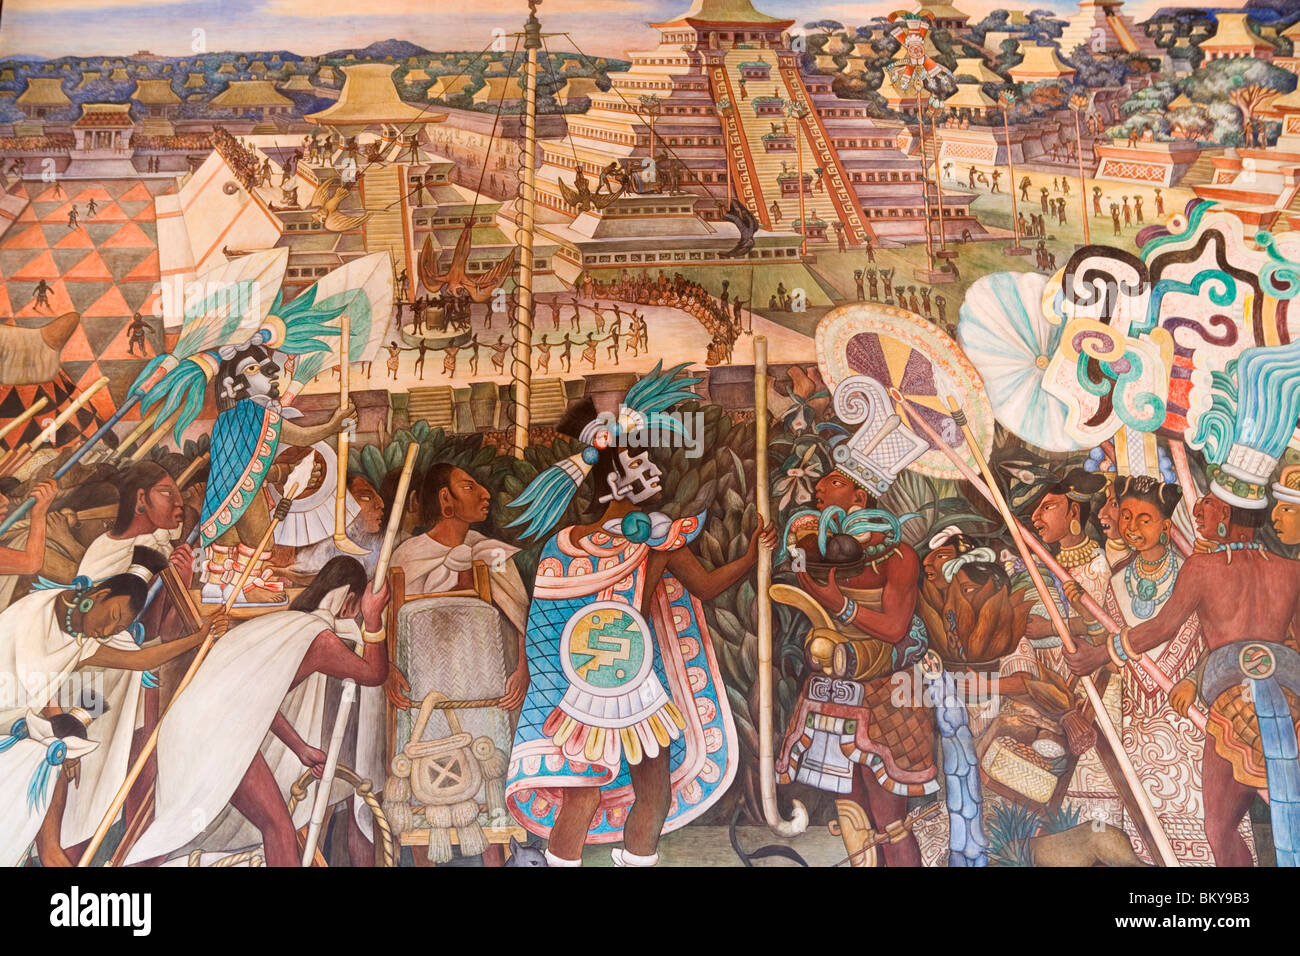 Diego Rivera's mural Totonac Civilization, El Tajin (1950) in the national palace of Mexico City, Mexico D.F., Mexico Stock Photo